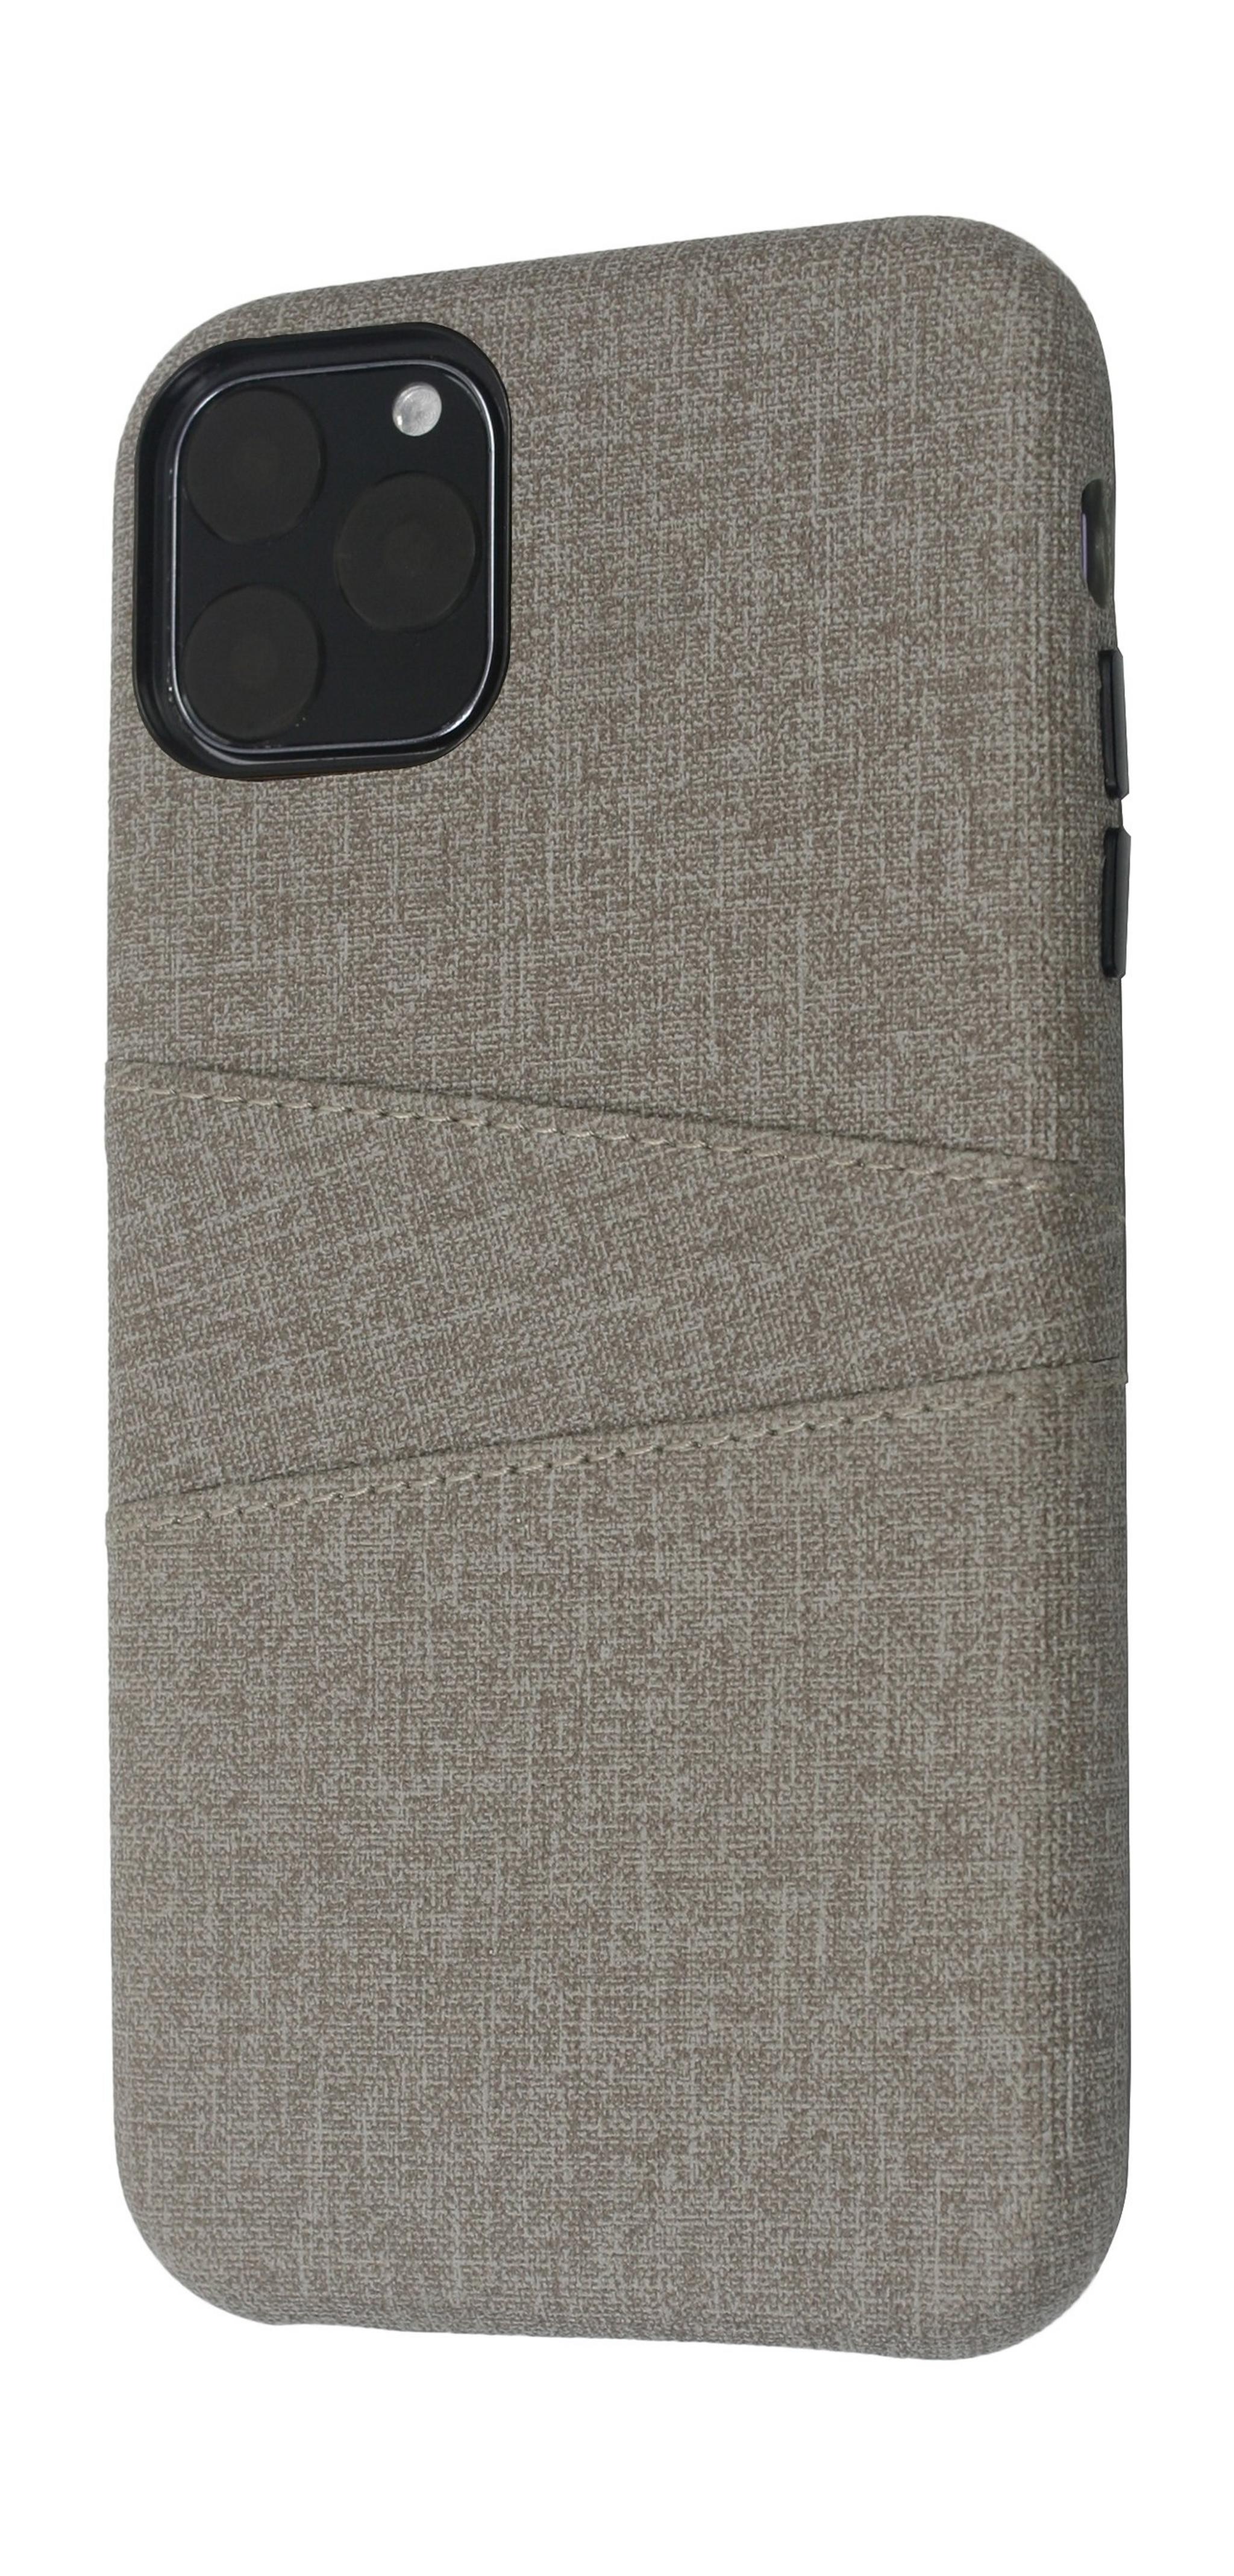 EQ iPhone 11 Pro Max Blank Pocket Back Case - Grey